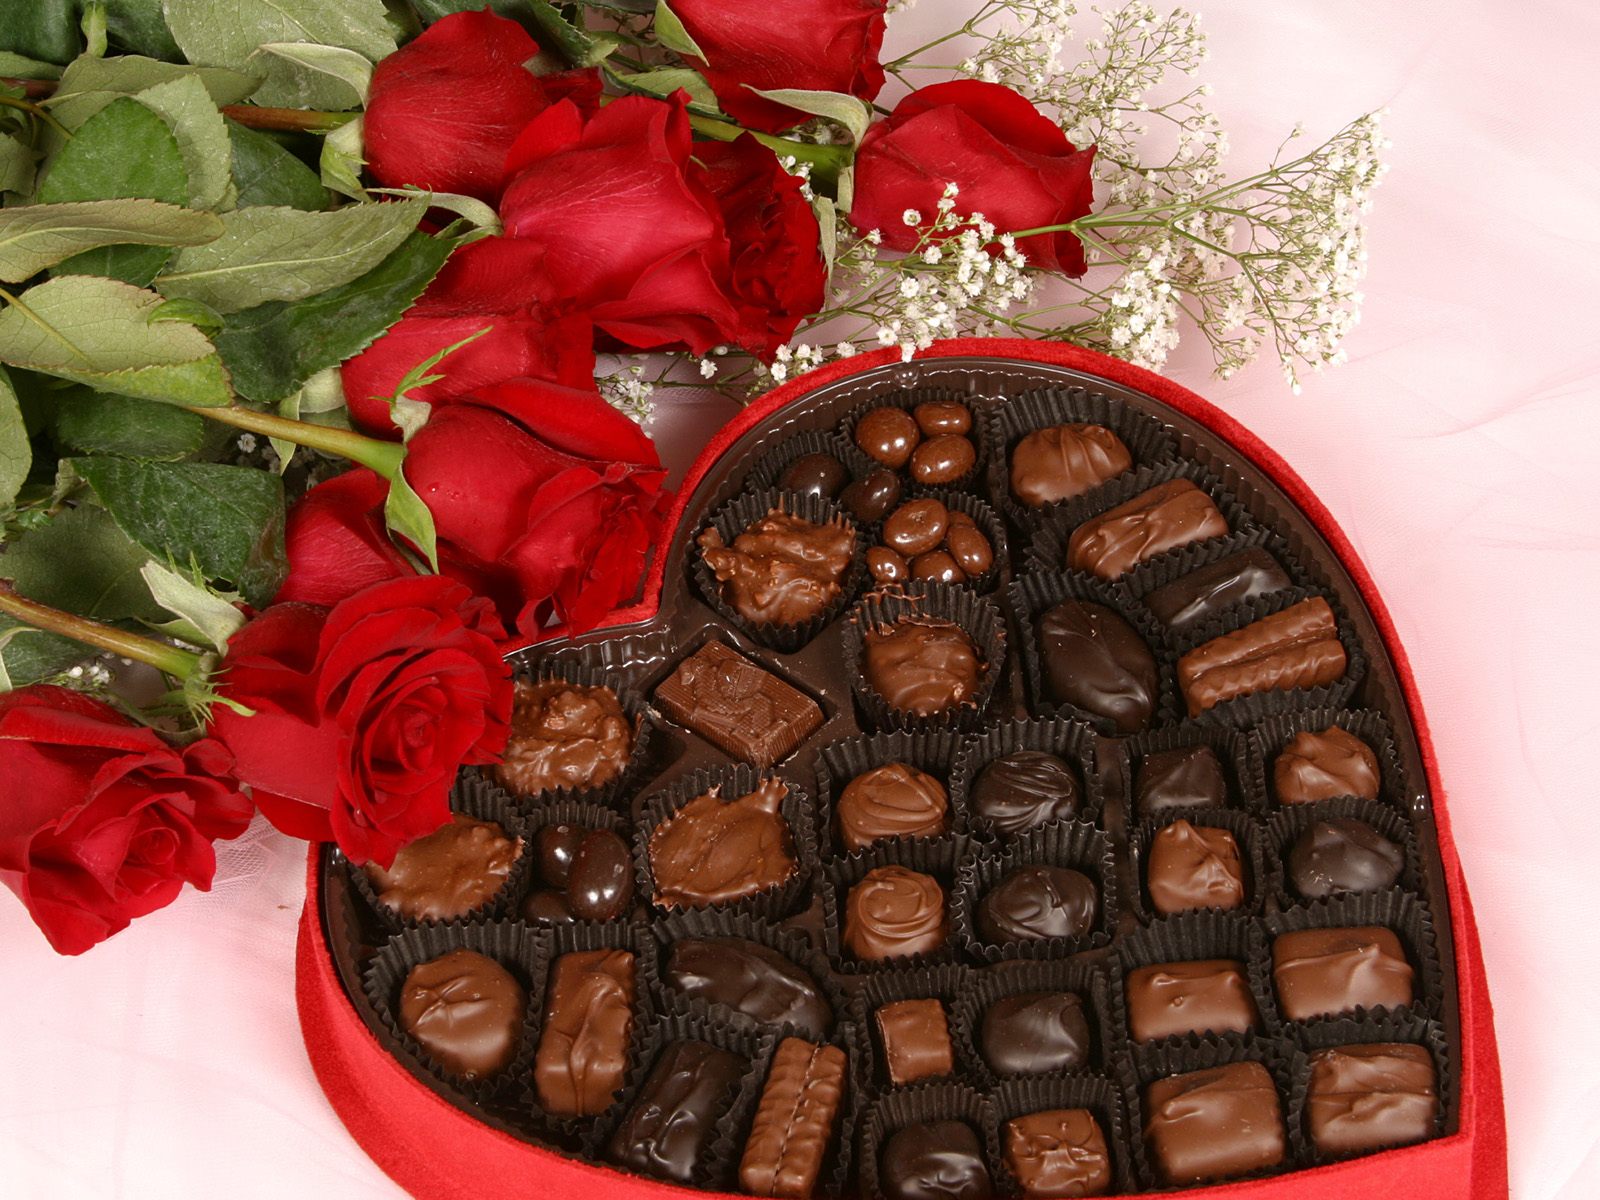 http://stopbeingaloser.files.wordpress.com/2011/02/heart-shaped-box-of-chocolates.jpg